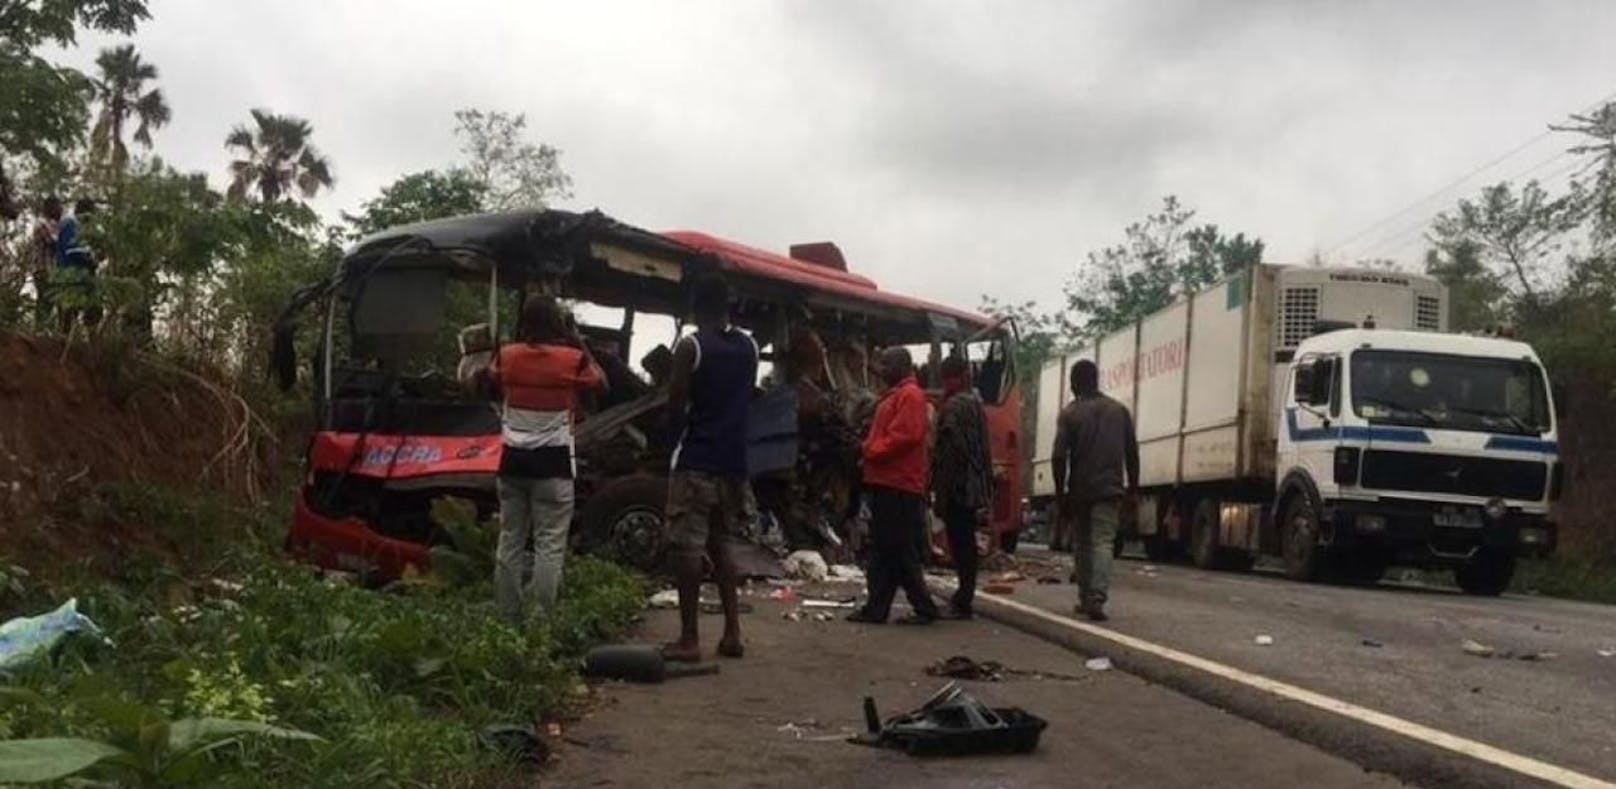 Busunglück in Ghana fordert 60 Tote